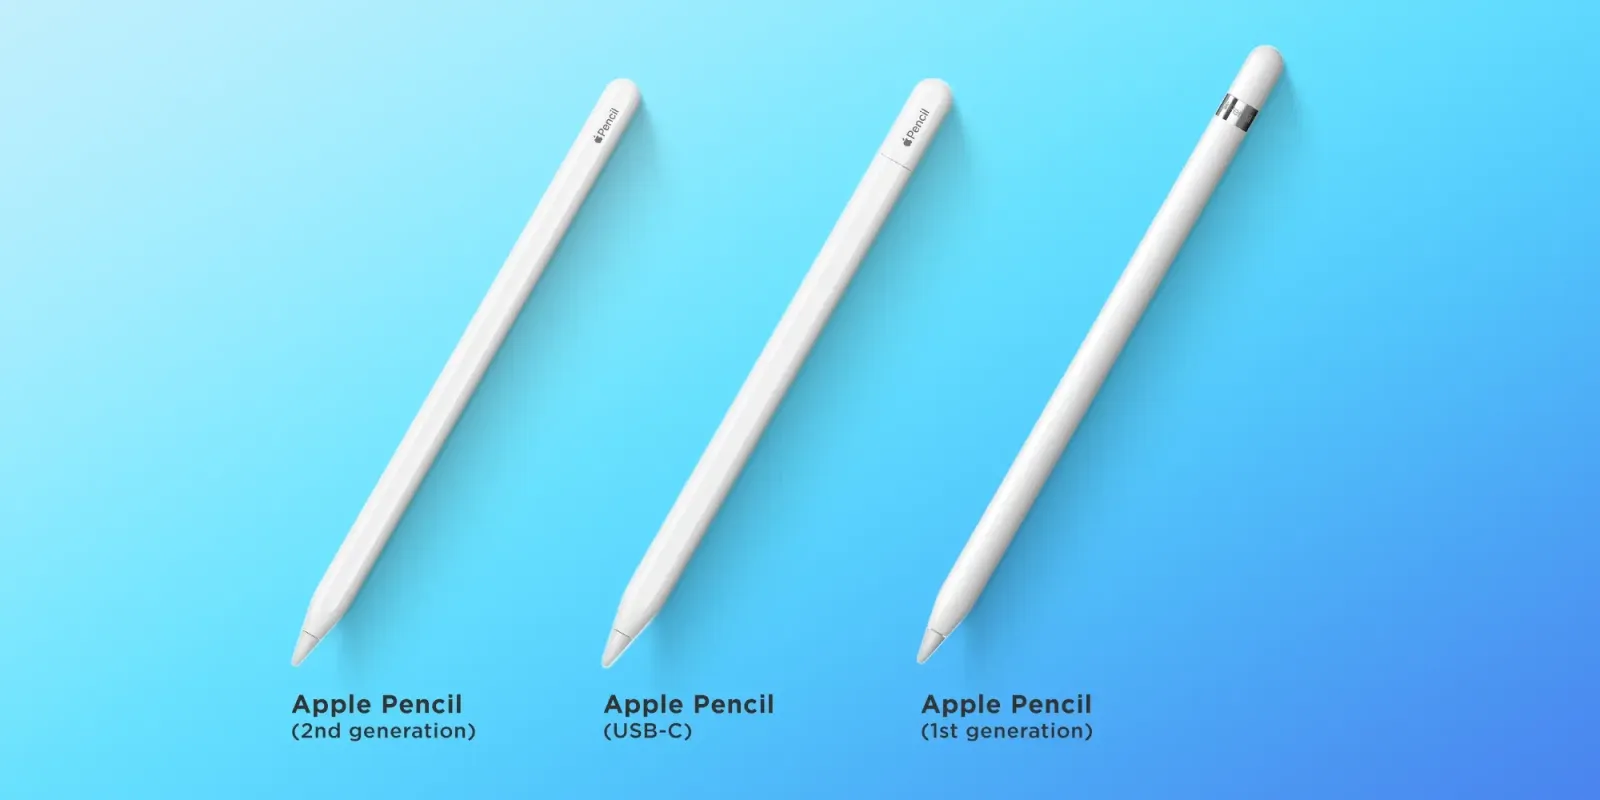 Apple Pencil Gen 2: Sleek, precise stylus for iPad Pro users